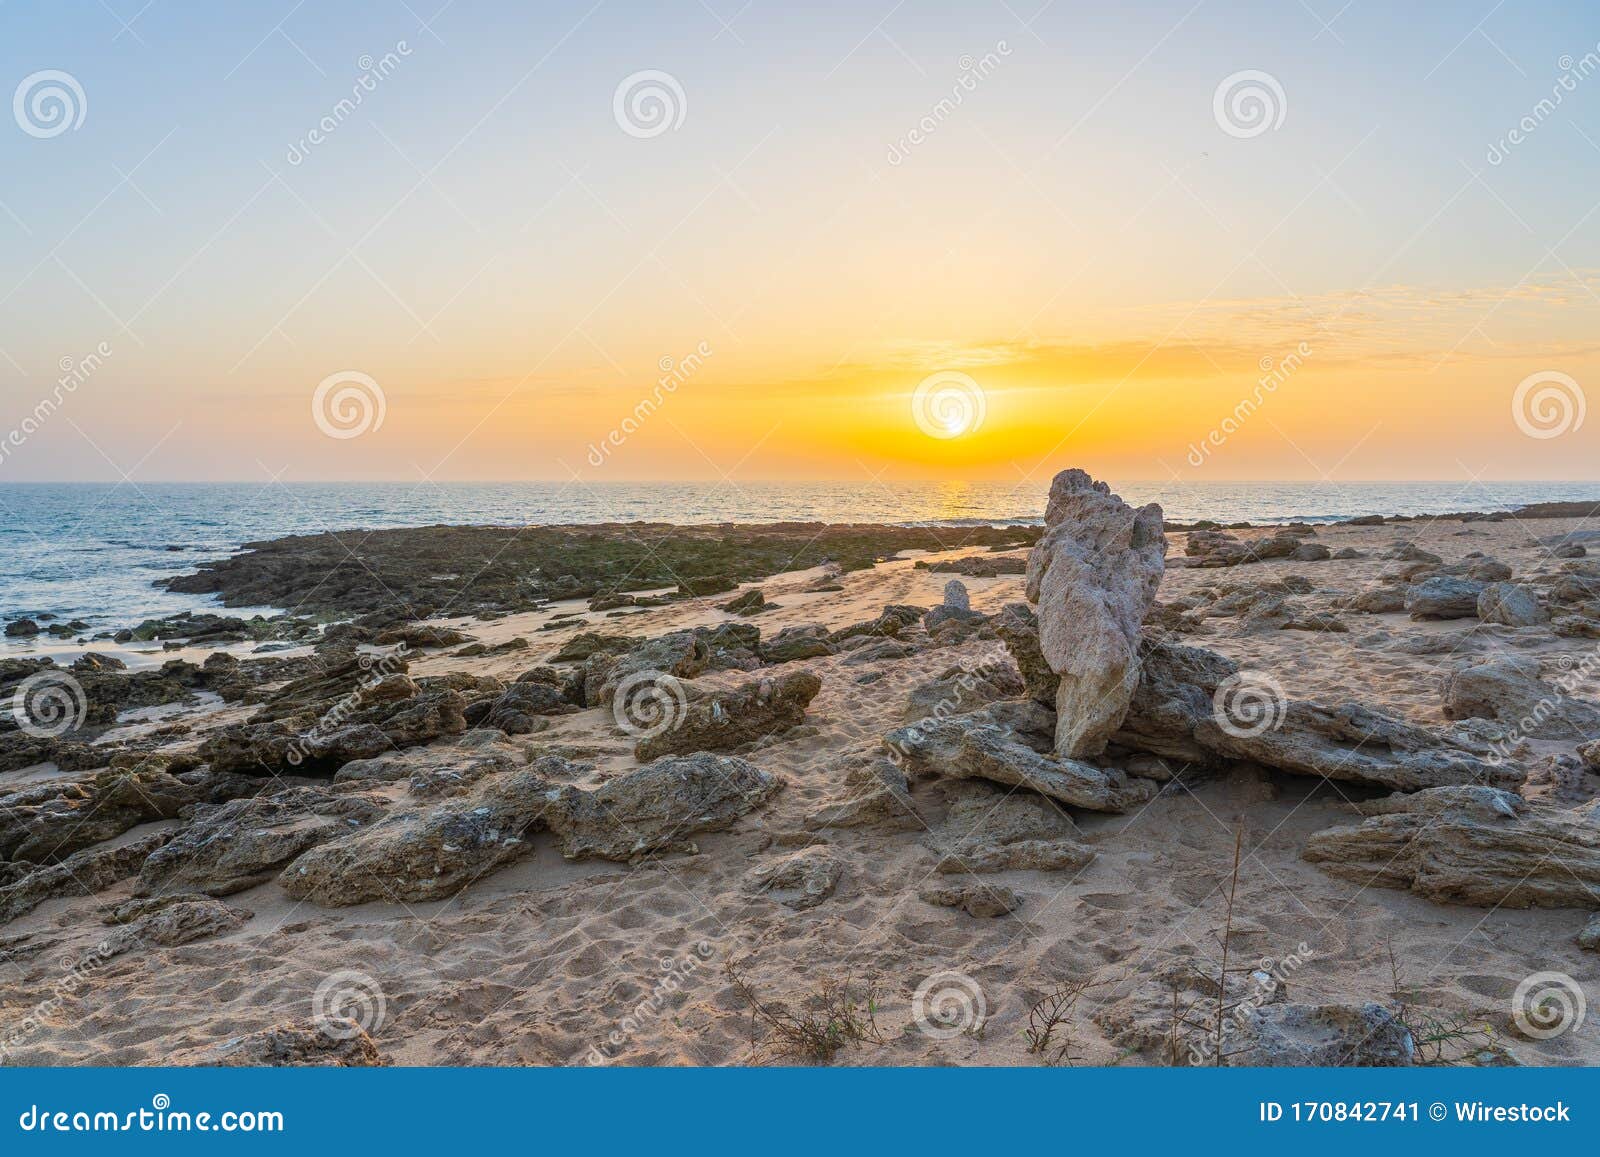 beautiful shot of a sunrise in the seashore of zahora spain